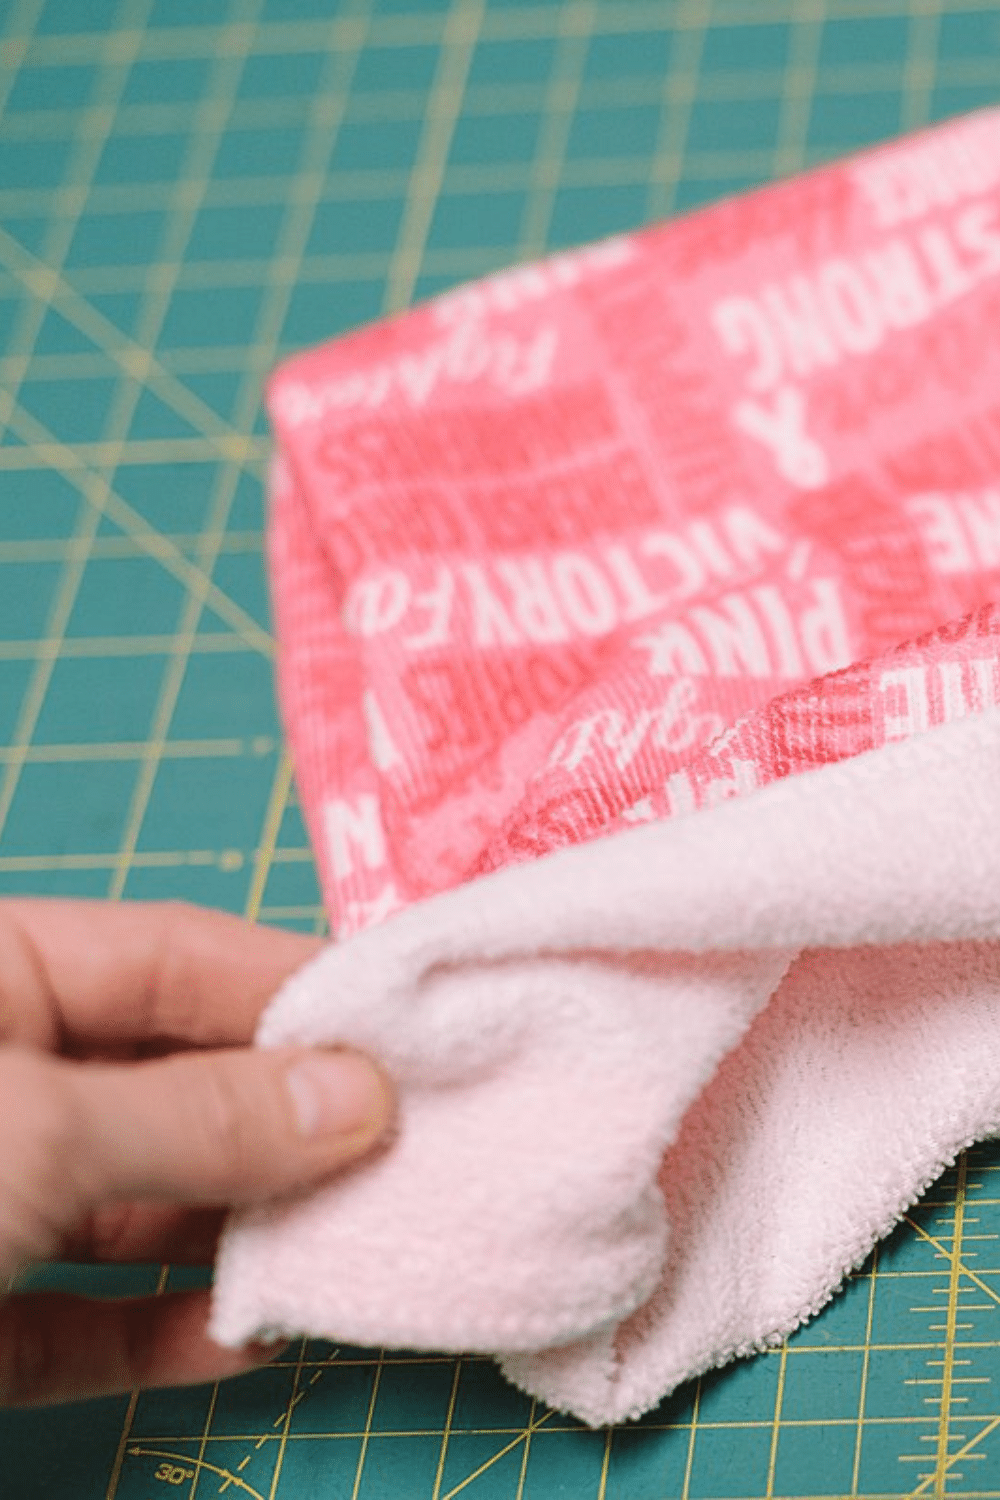 DIY Breast Cancer Hand Towel Tote Bag